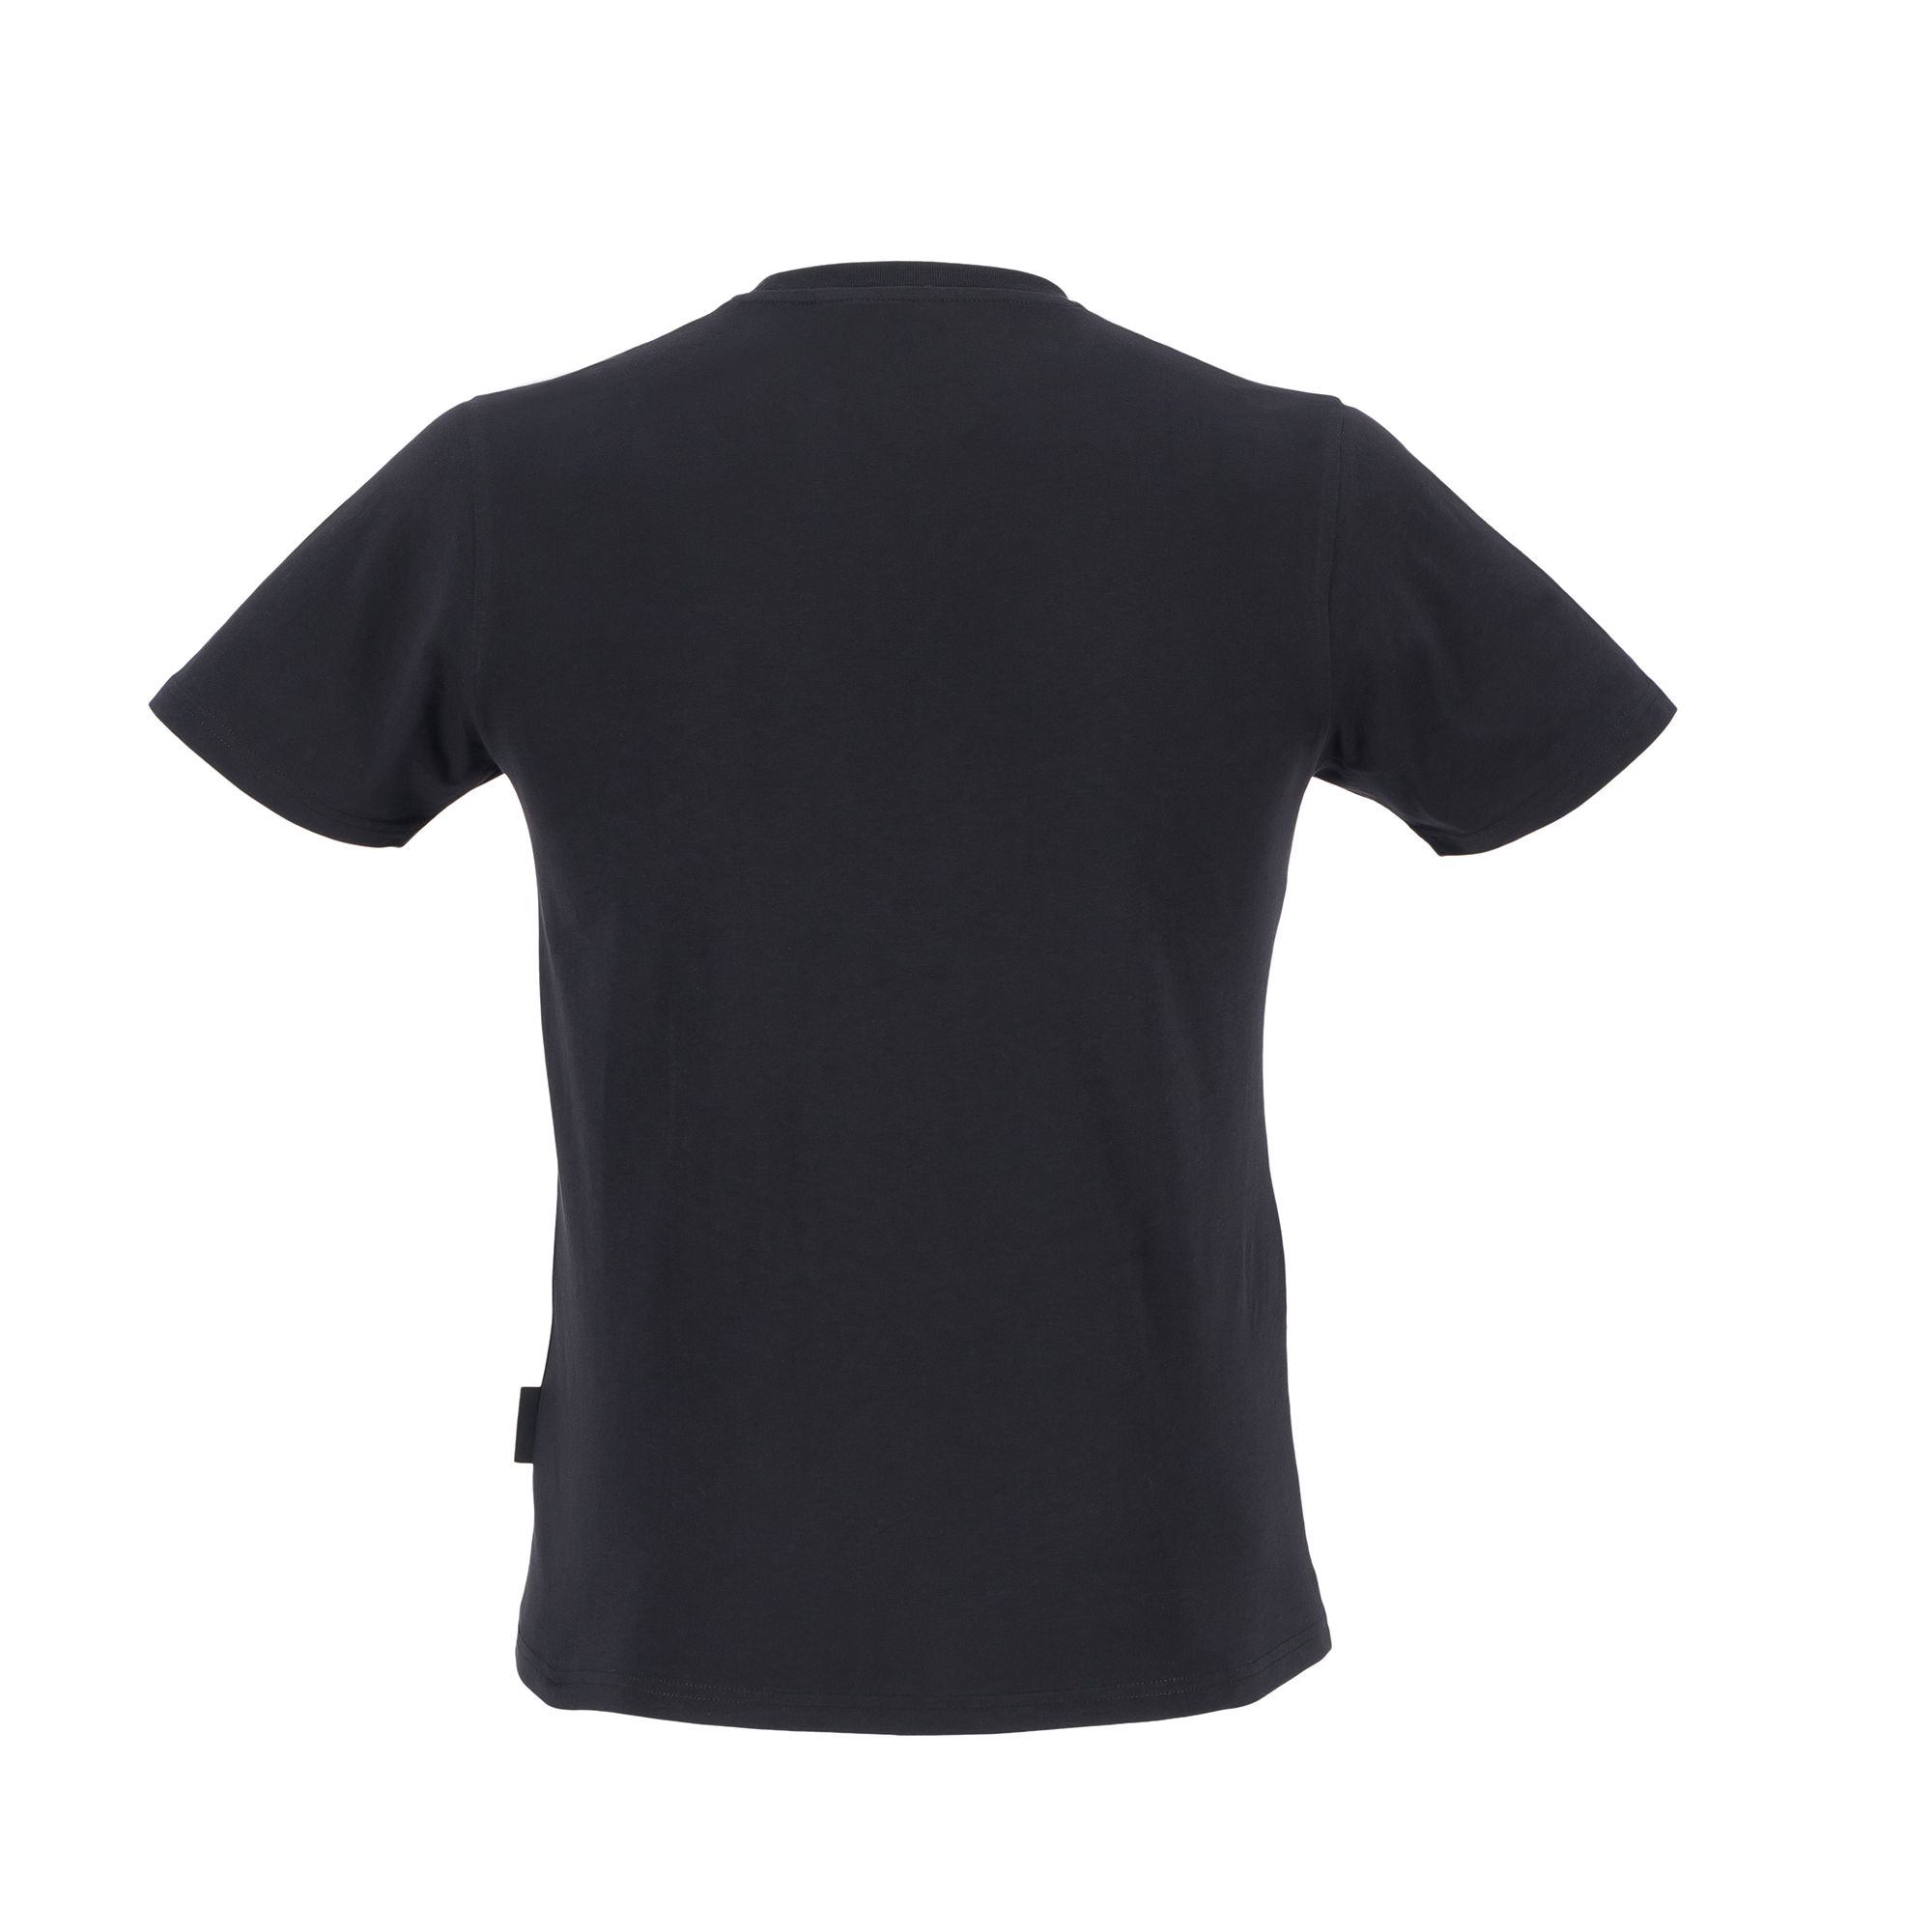 Site Allitt Black T-shirt Medium